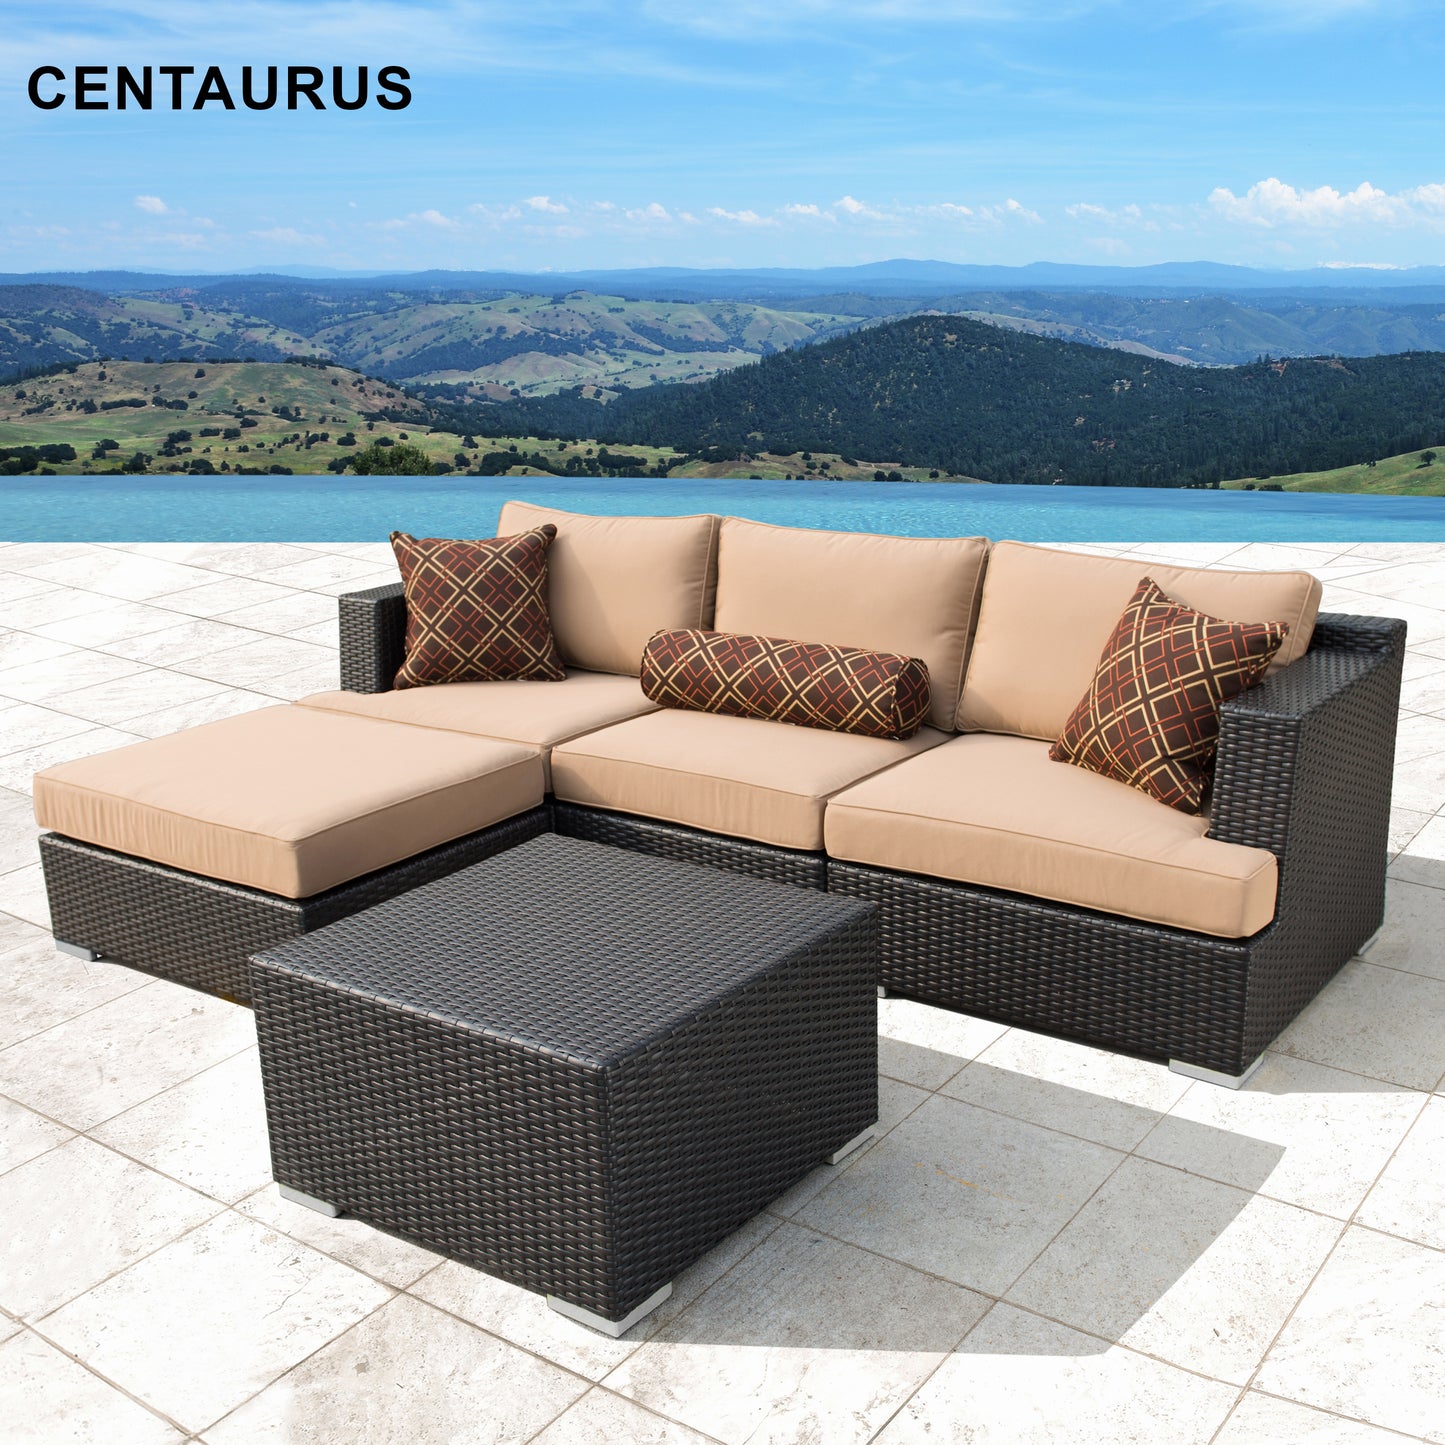 Centaurus Collection - 5-piece Seating Set with Sunbrella Cushions